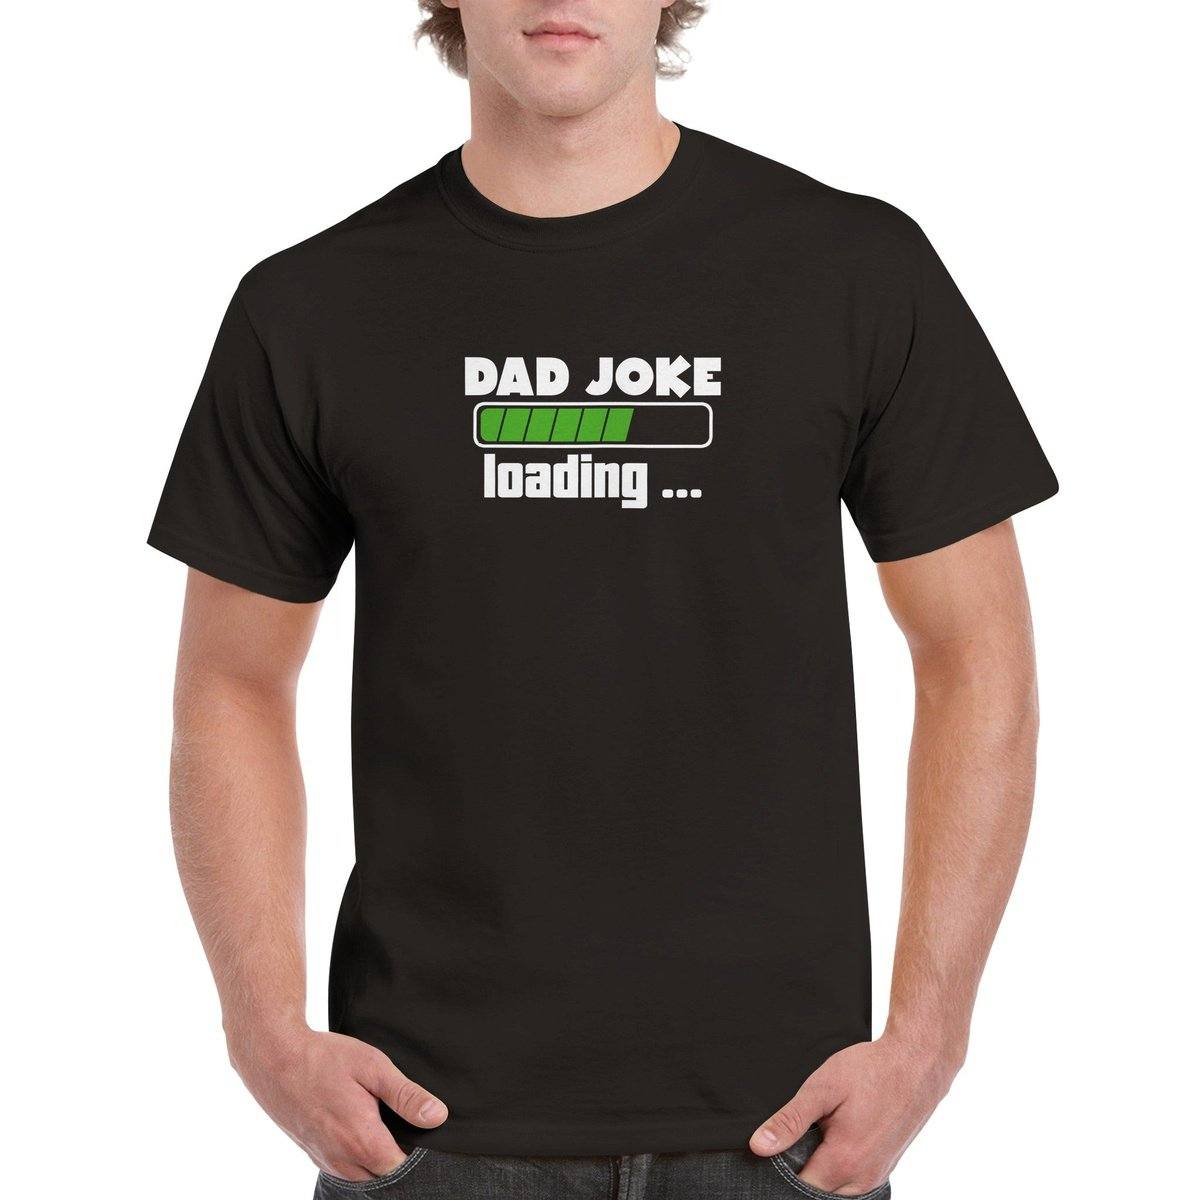 Dad Joke Loading T-SHIRT Australia Online Color